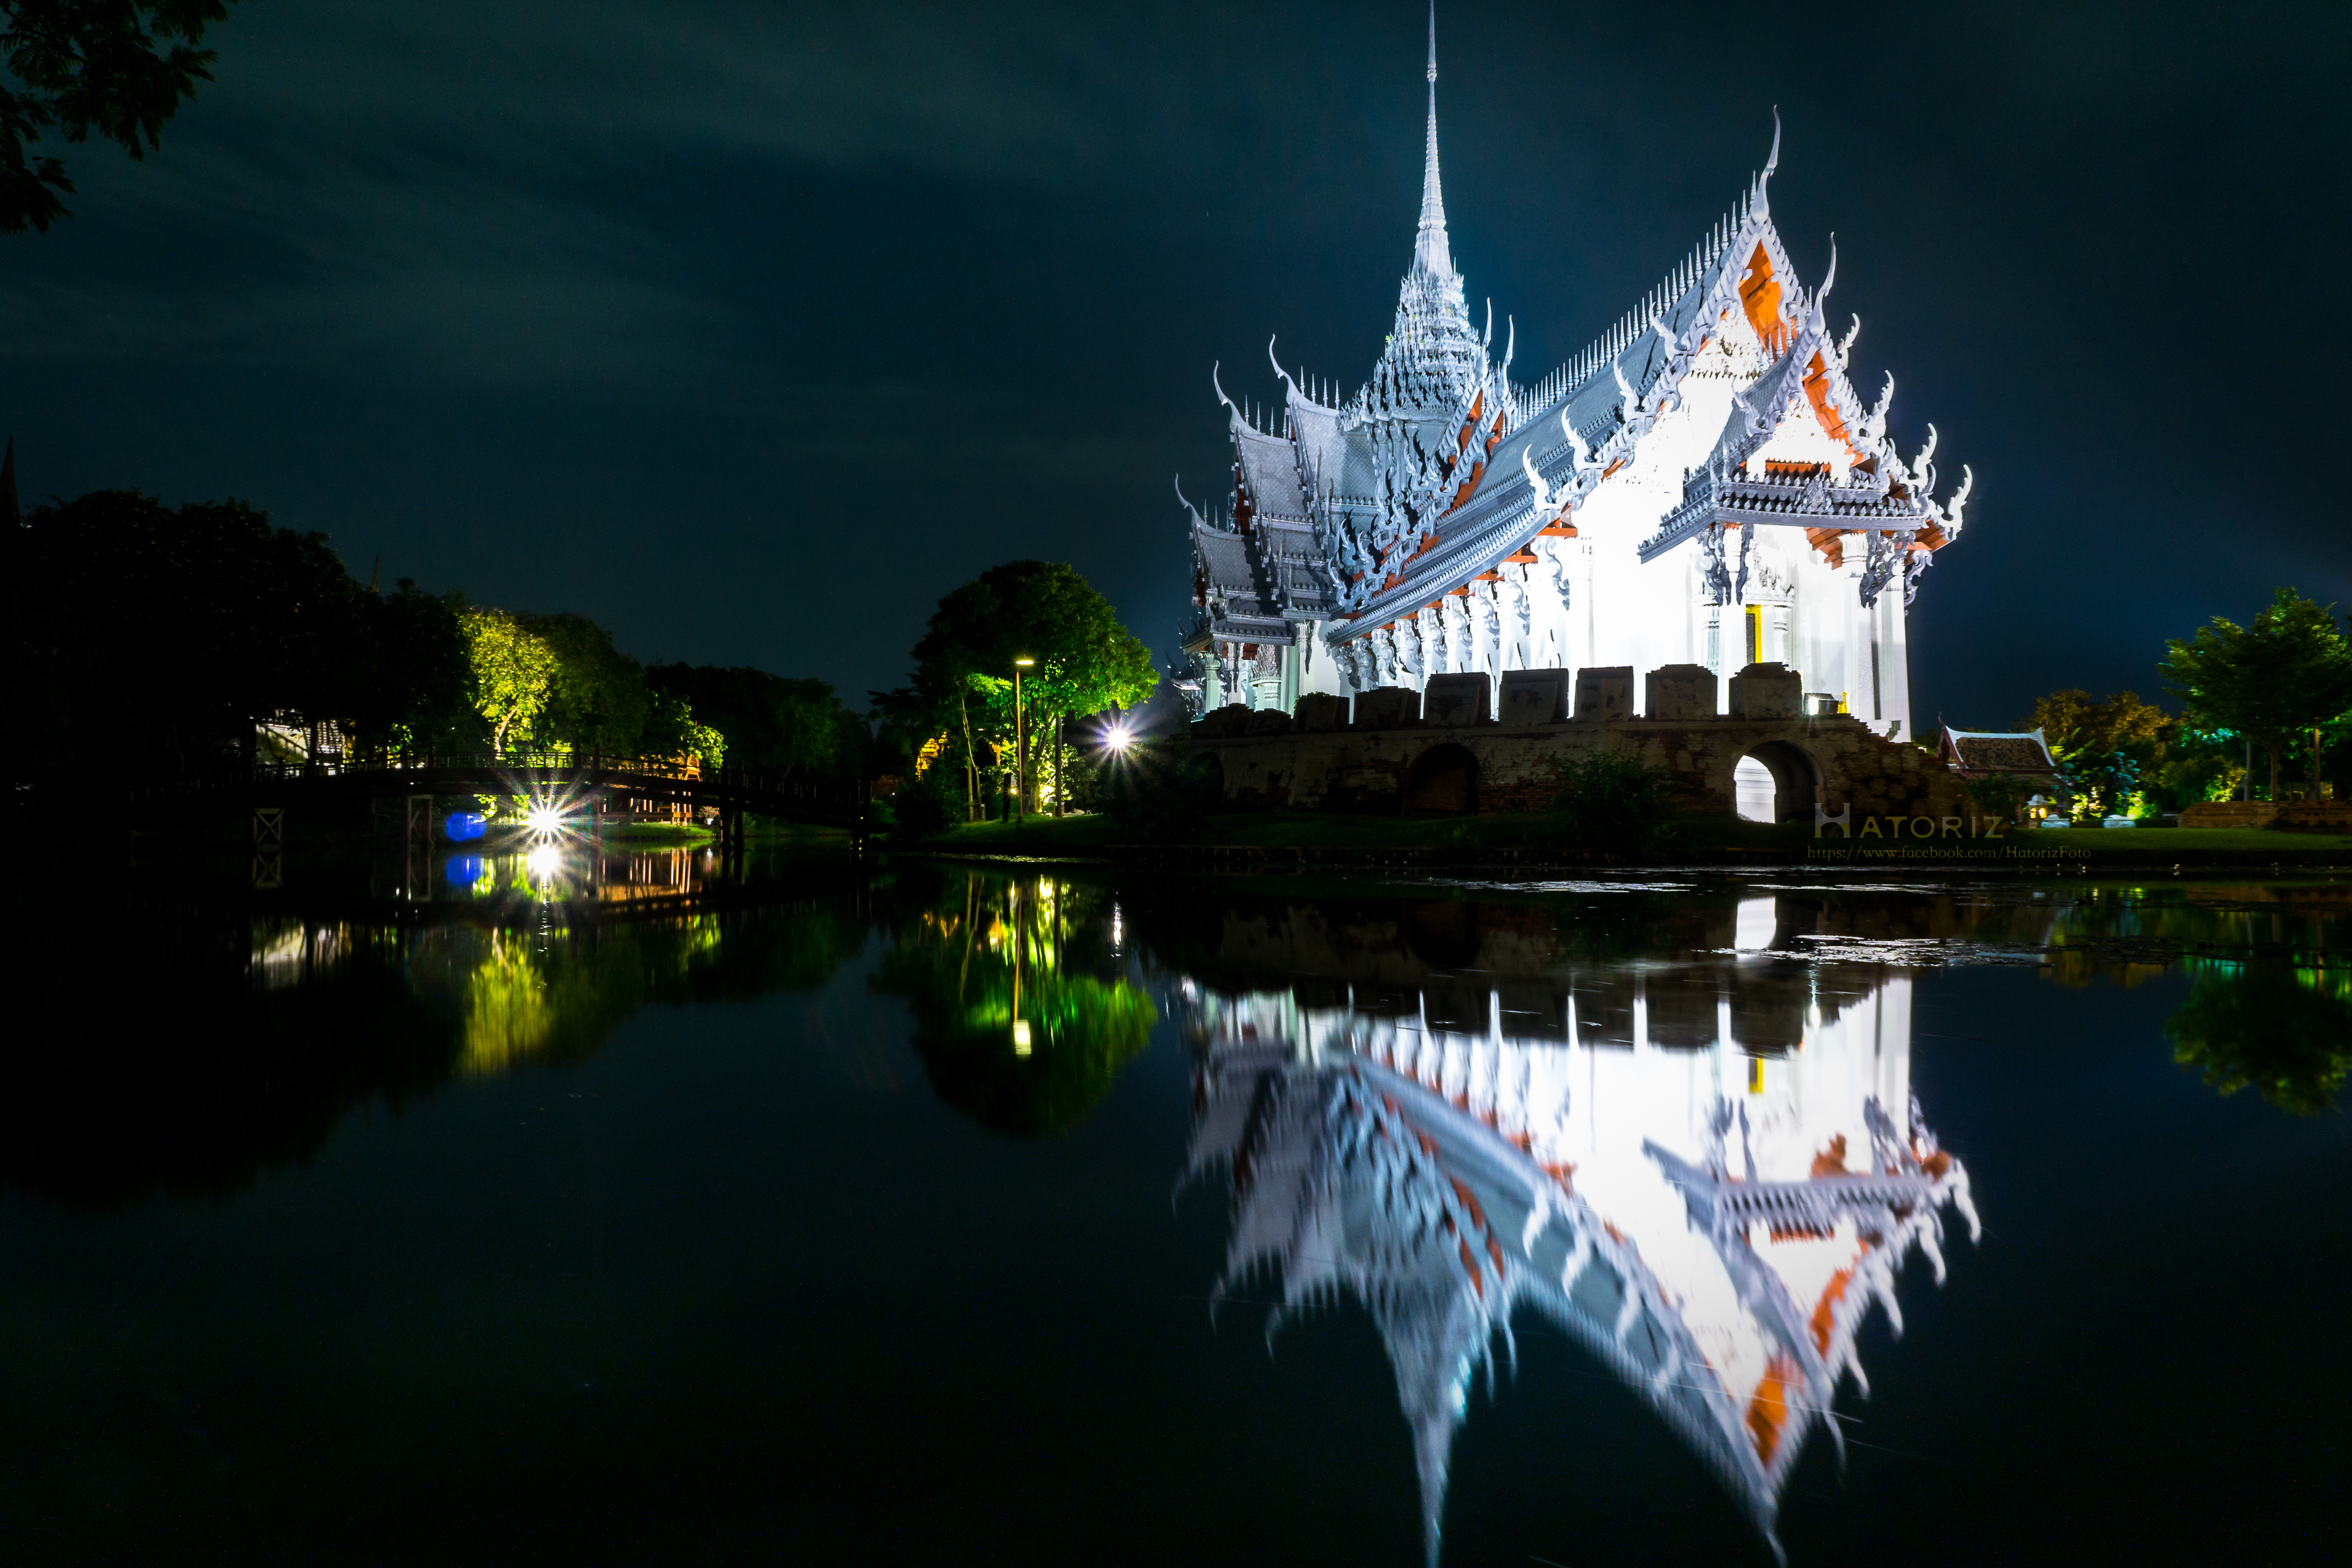 Sanphet Prasat Palace at Ancient Siam by Hatoriz Foto